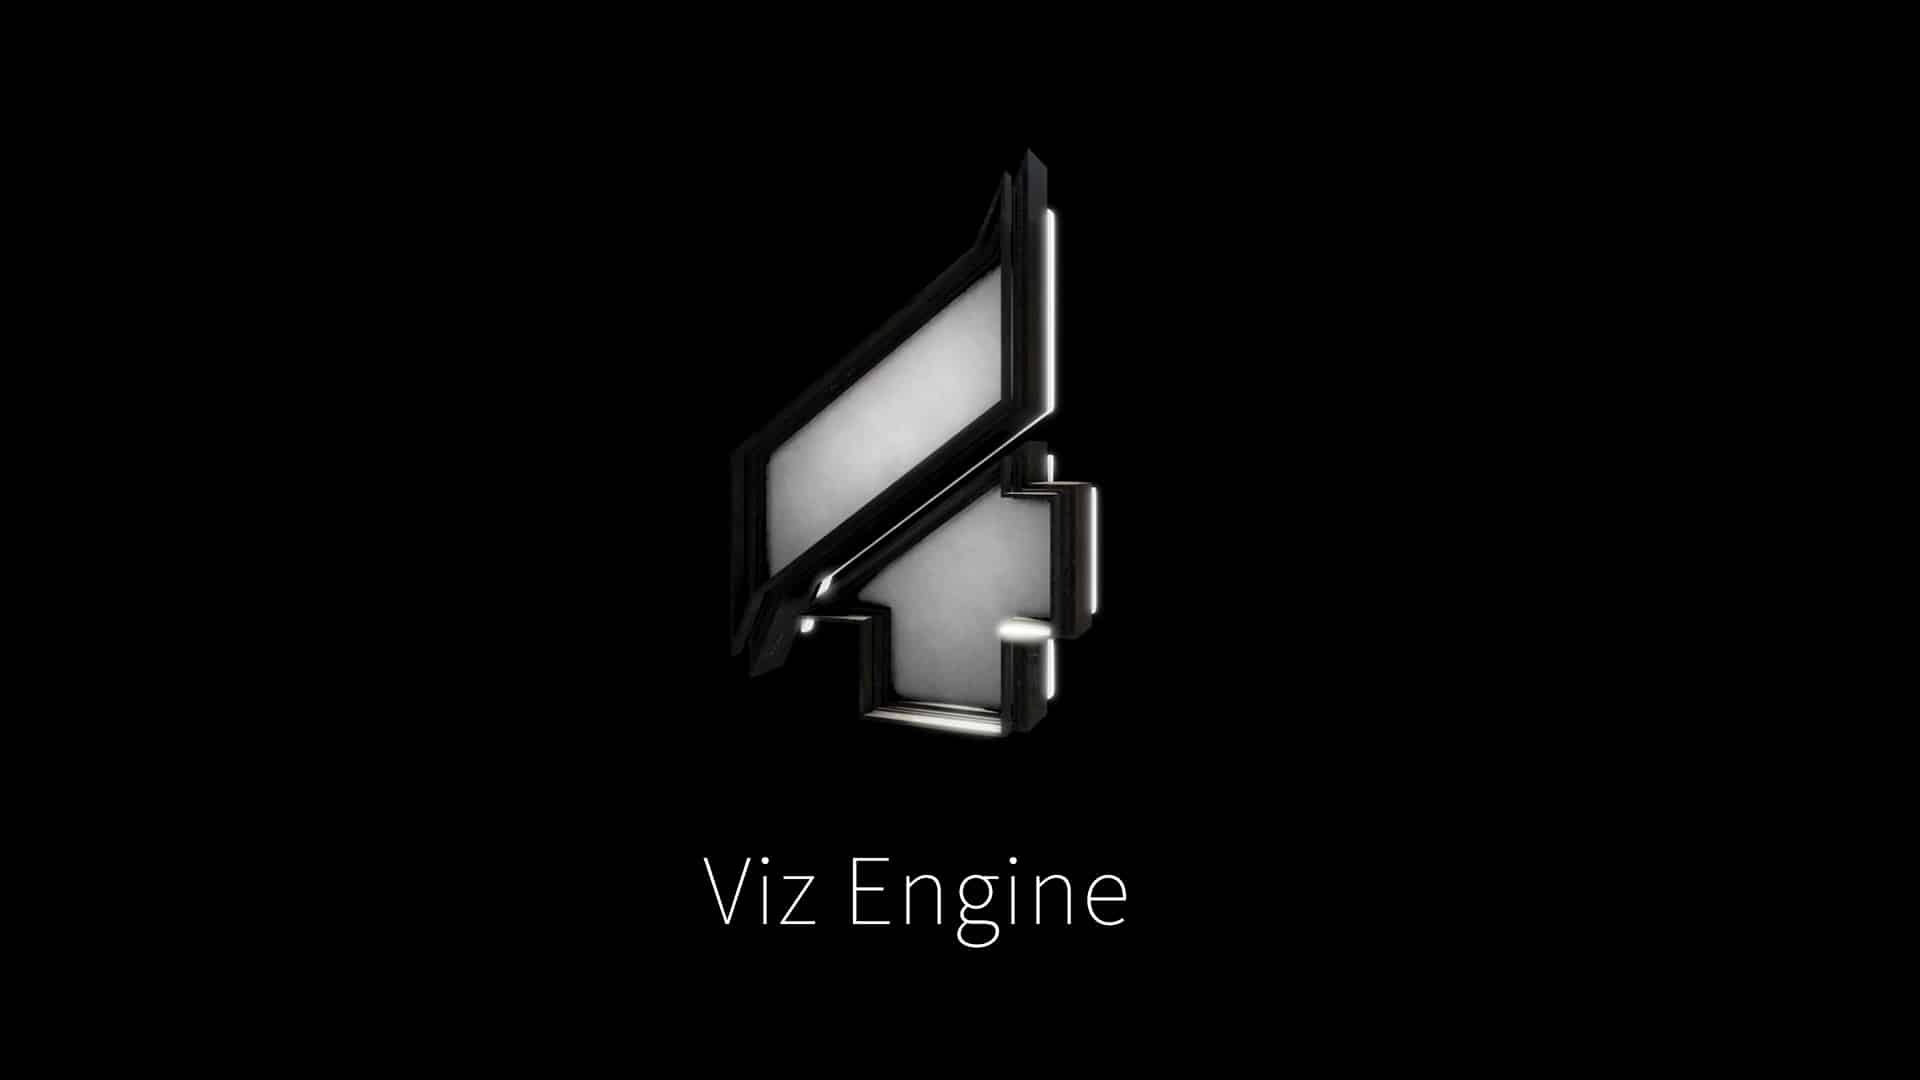 Viz Engine 4 logo with rendering